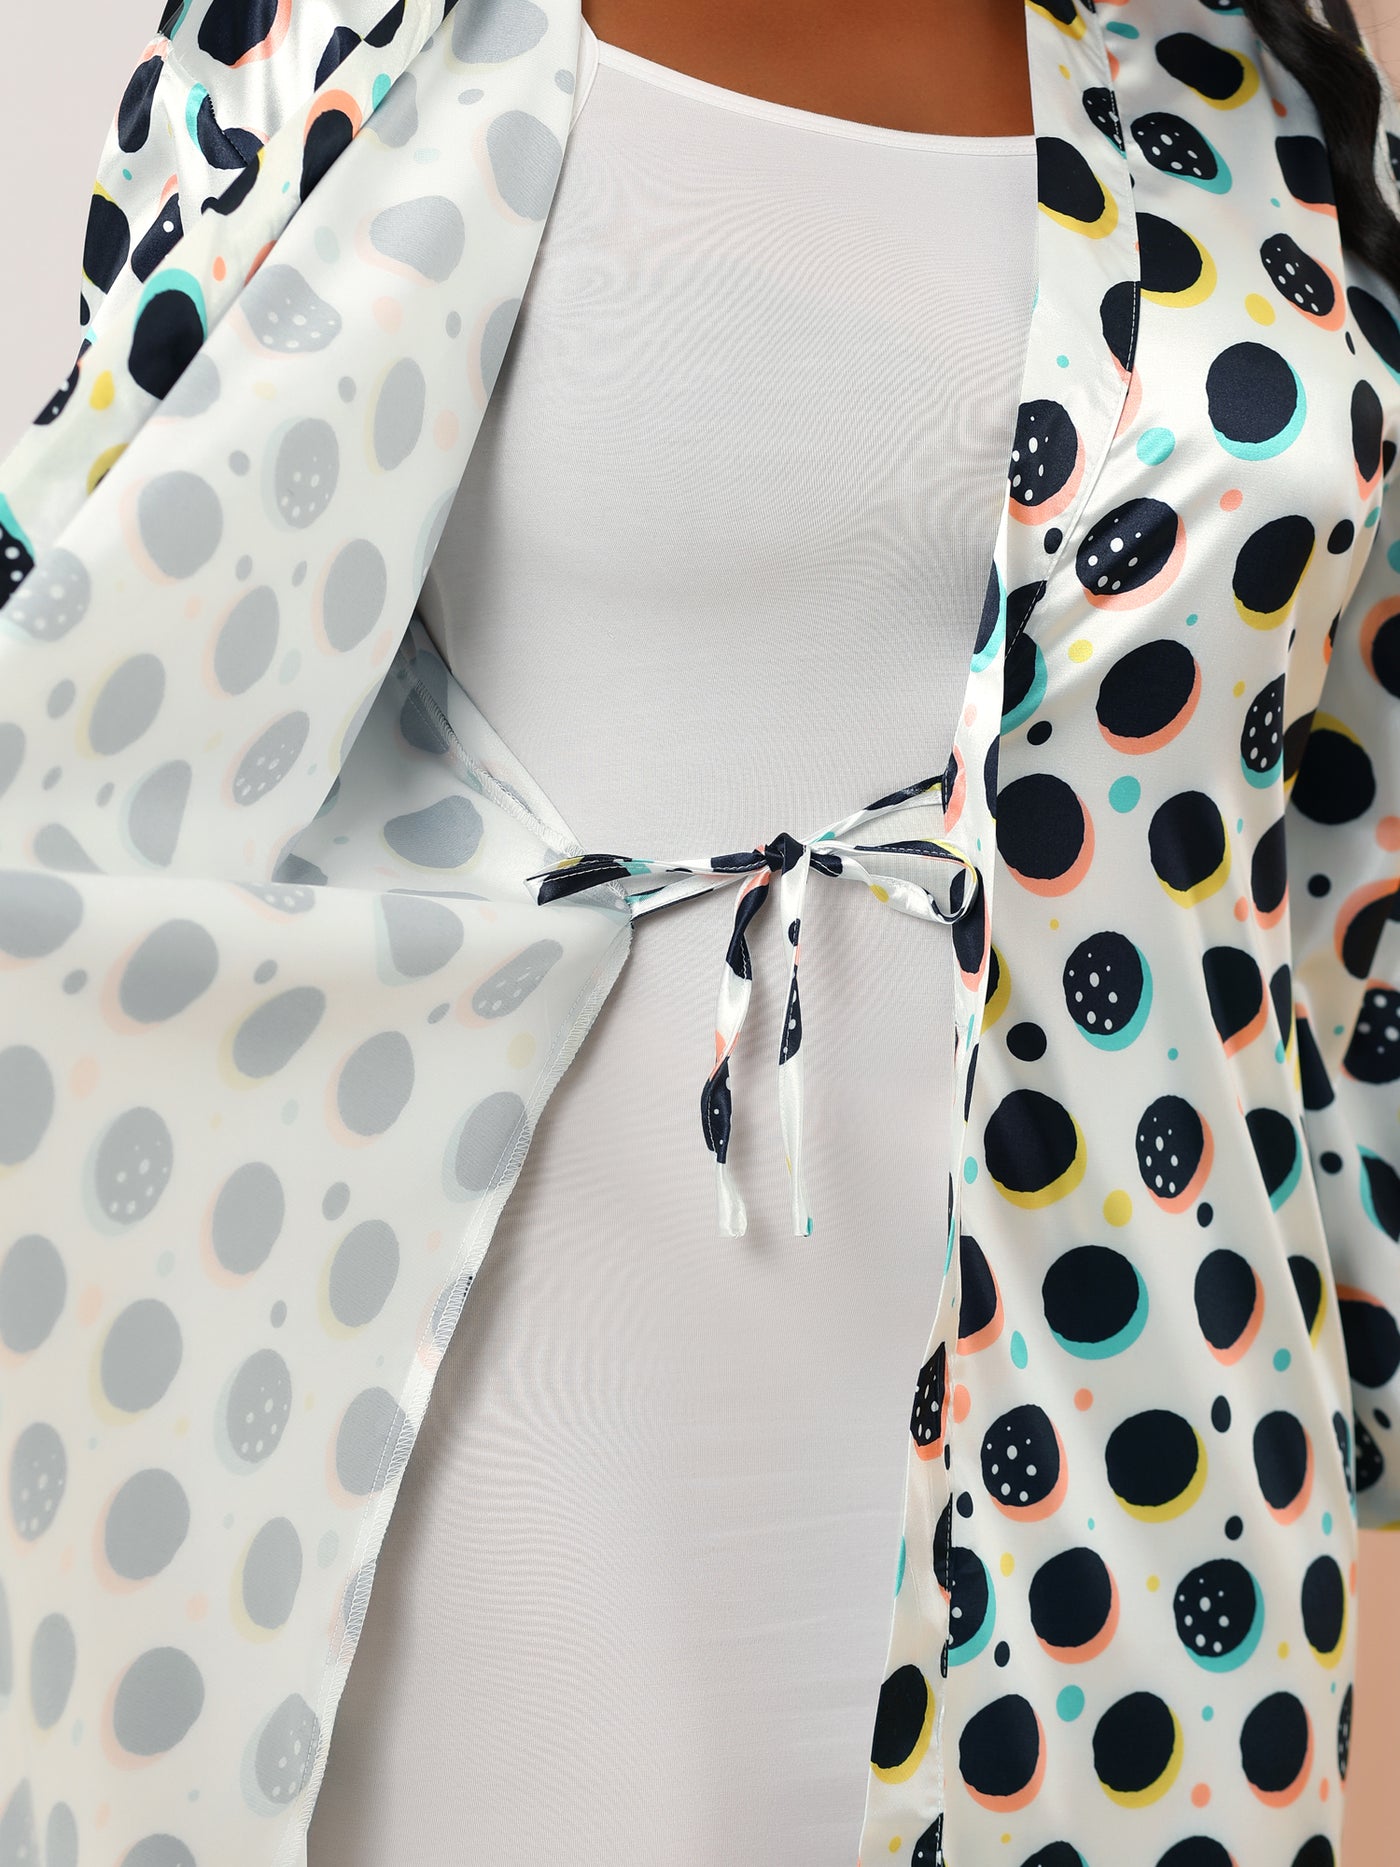 Bublédon Women's Plus Size Robes Sleepwear Polka Dots Self Tie Waist Long Bathrobe Nightgown